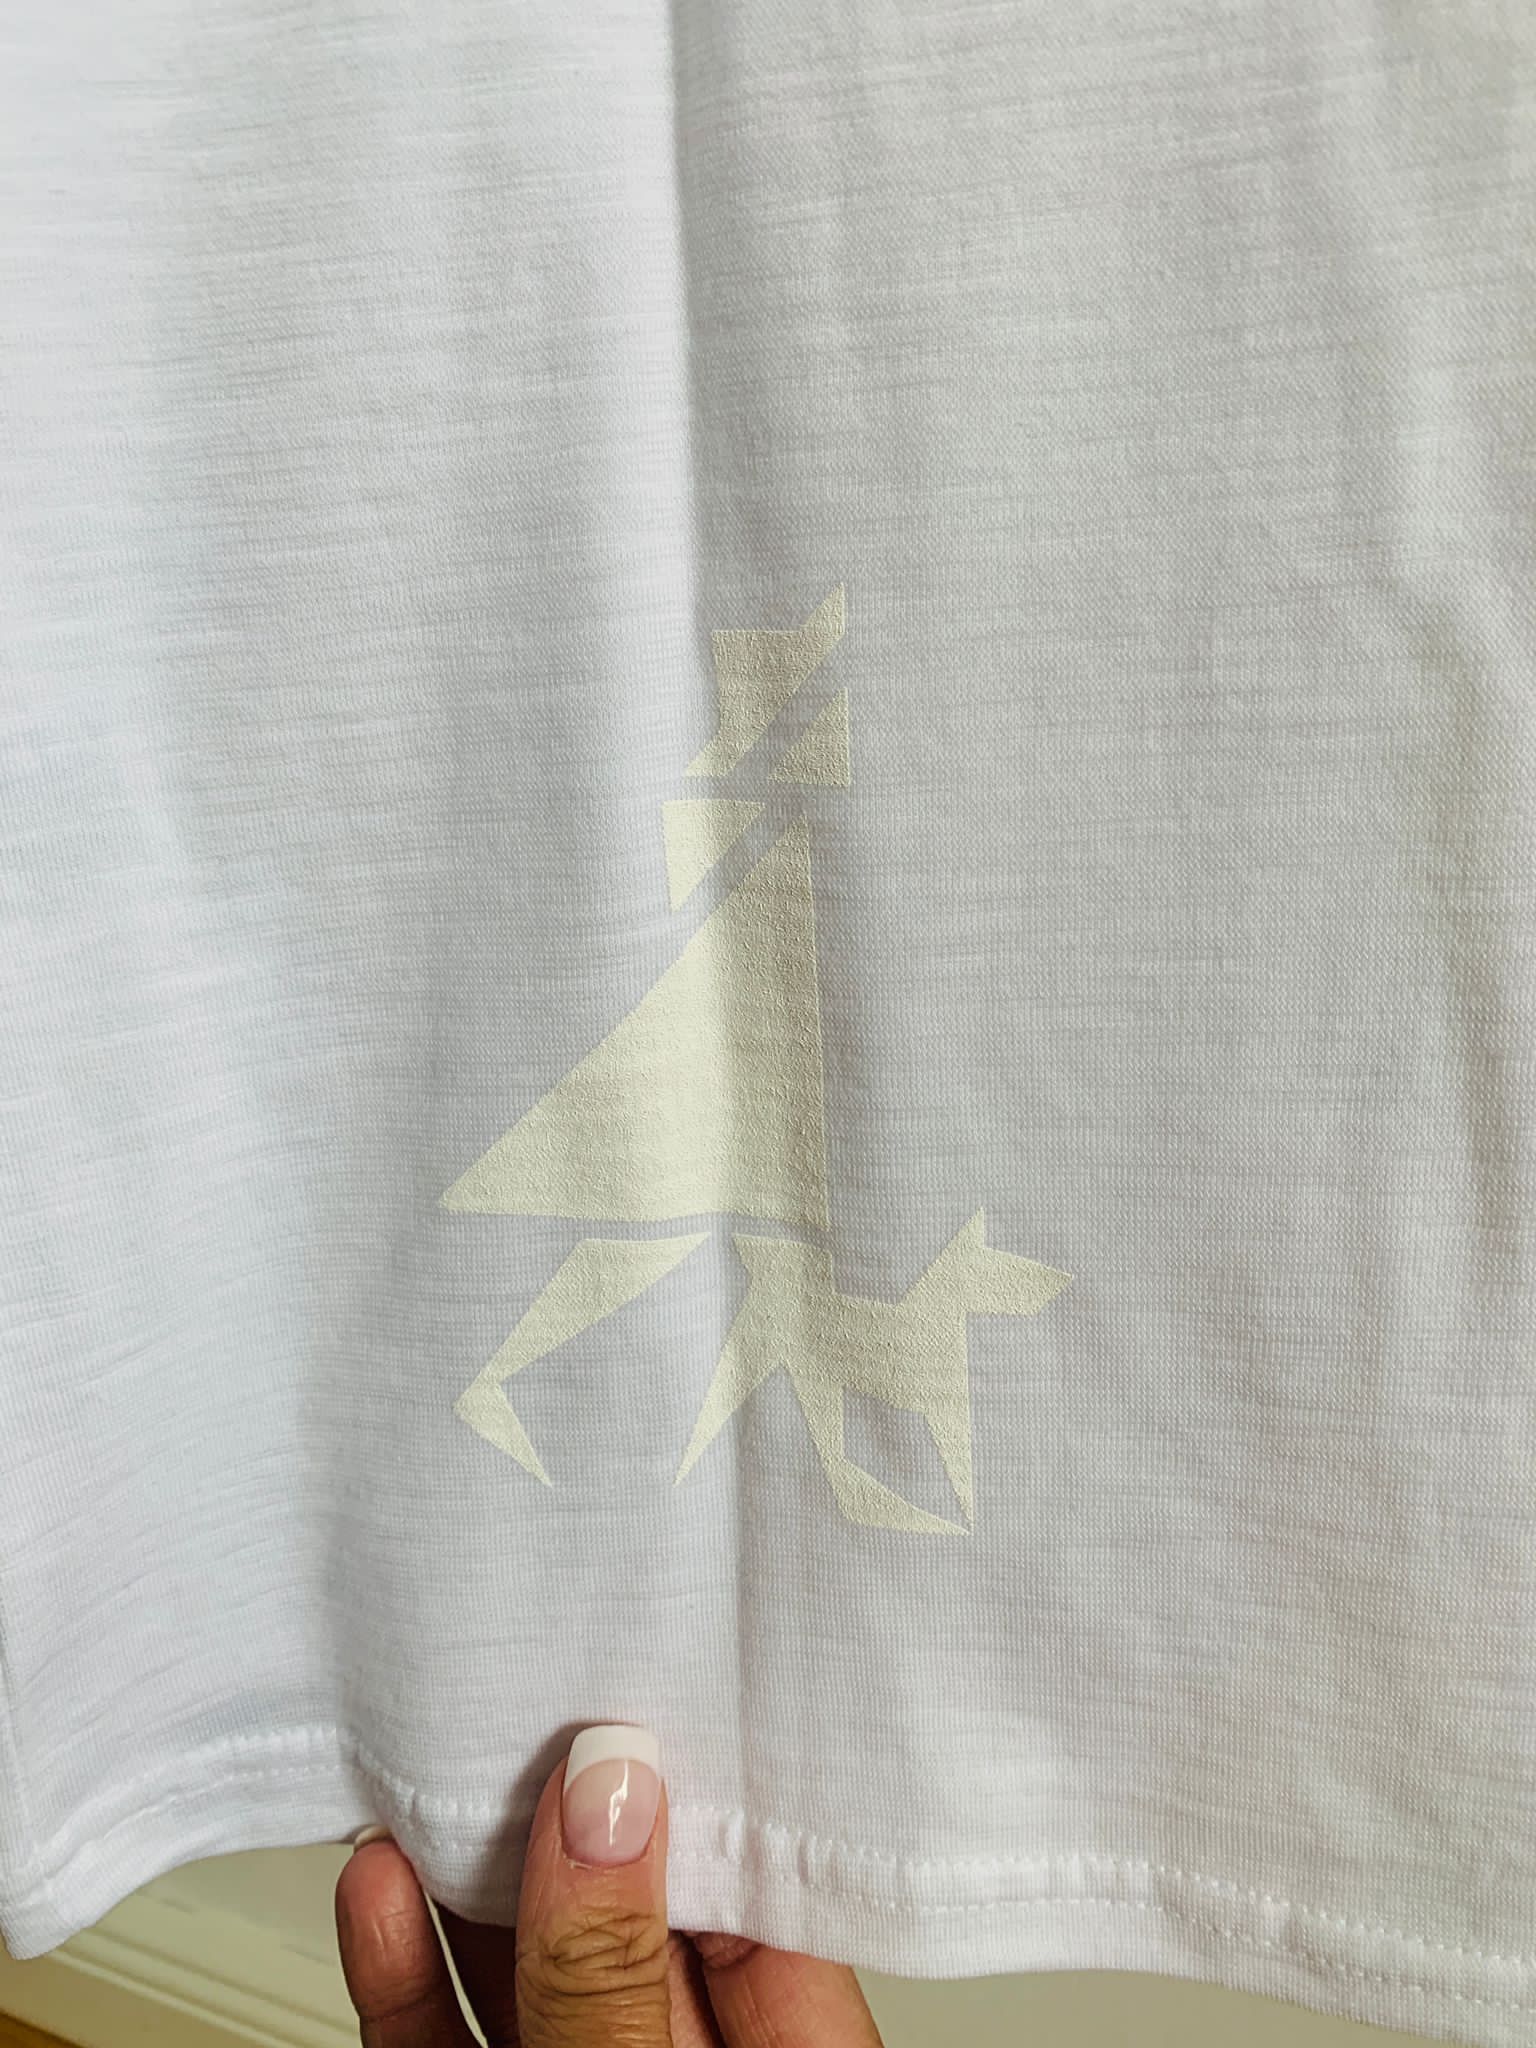 SALZHAUT Herren T-Shirt mit coolem Style "Kimm white"